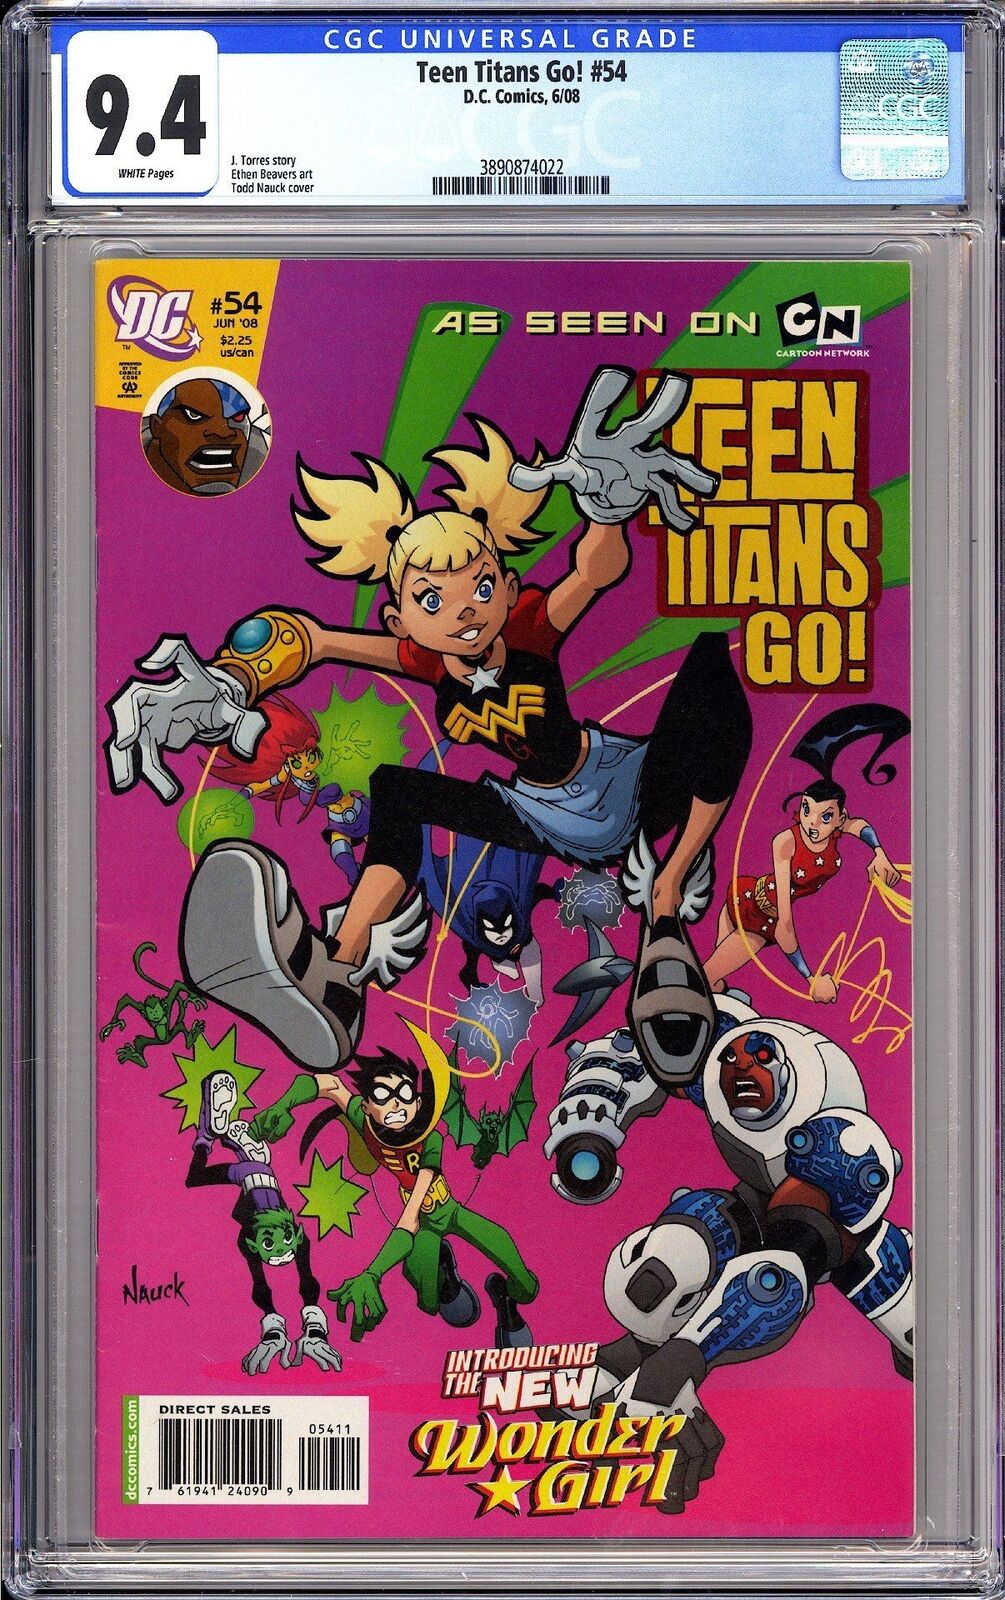 Teen Titans Go 54 CGC 9.4 2008 3890874022 Introducing New Wonder Girl